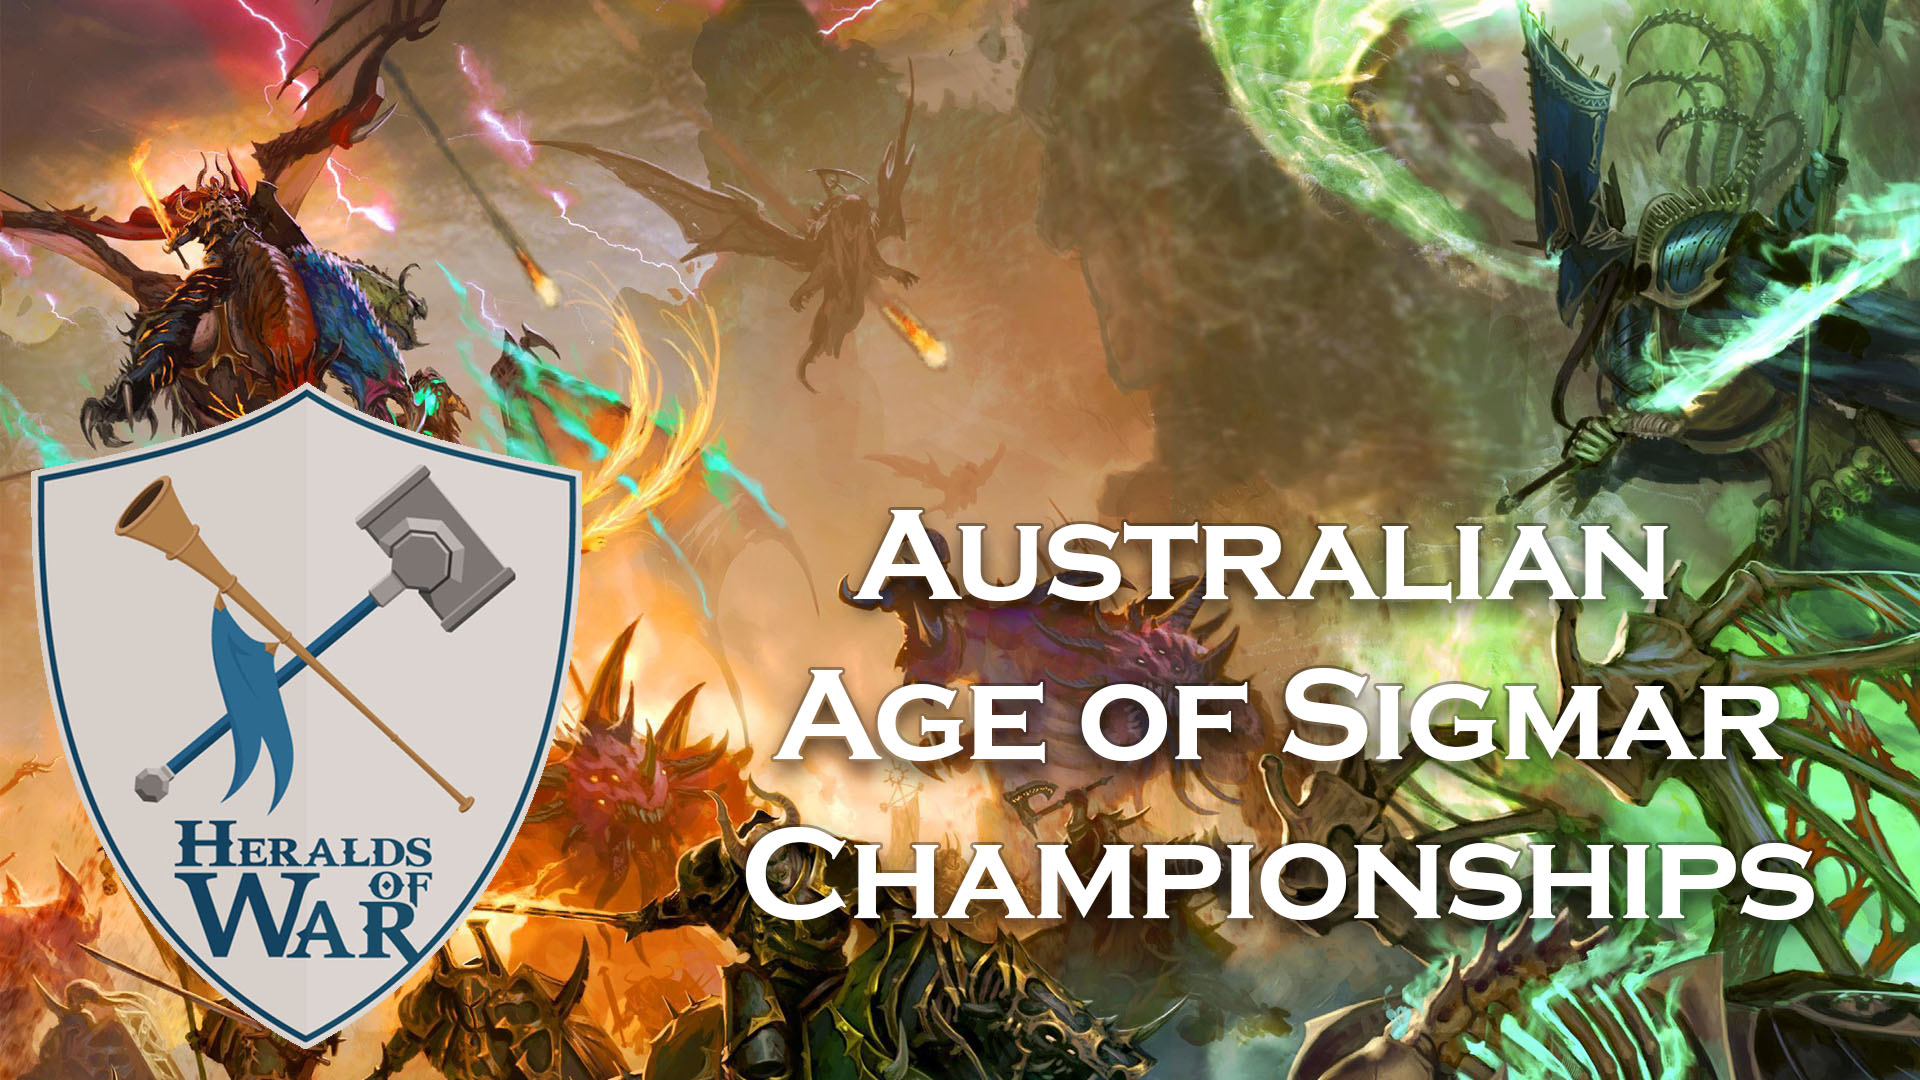 Australian Age of Sigmar Championships